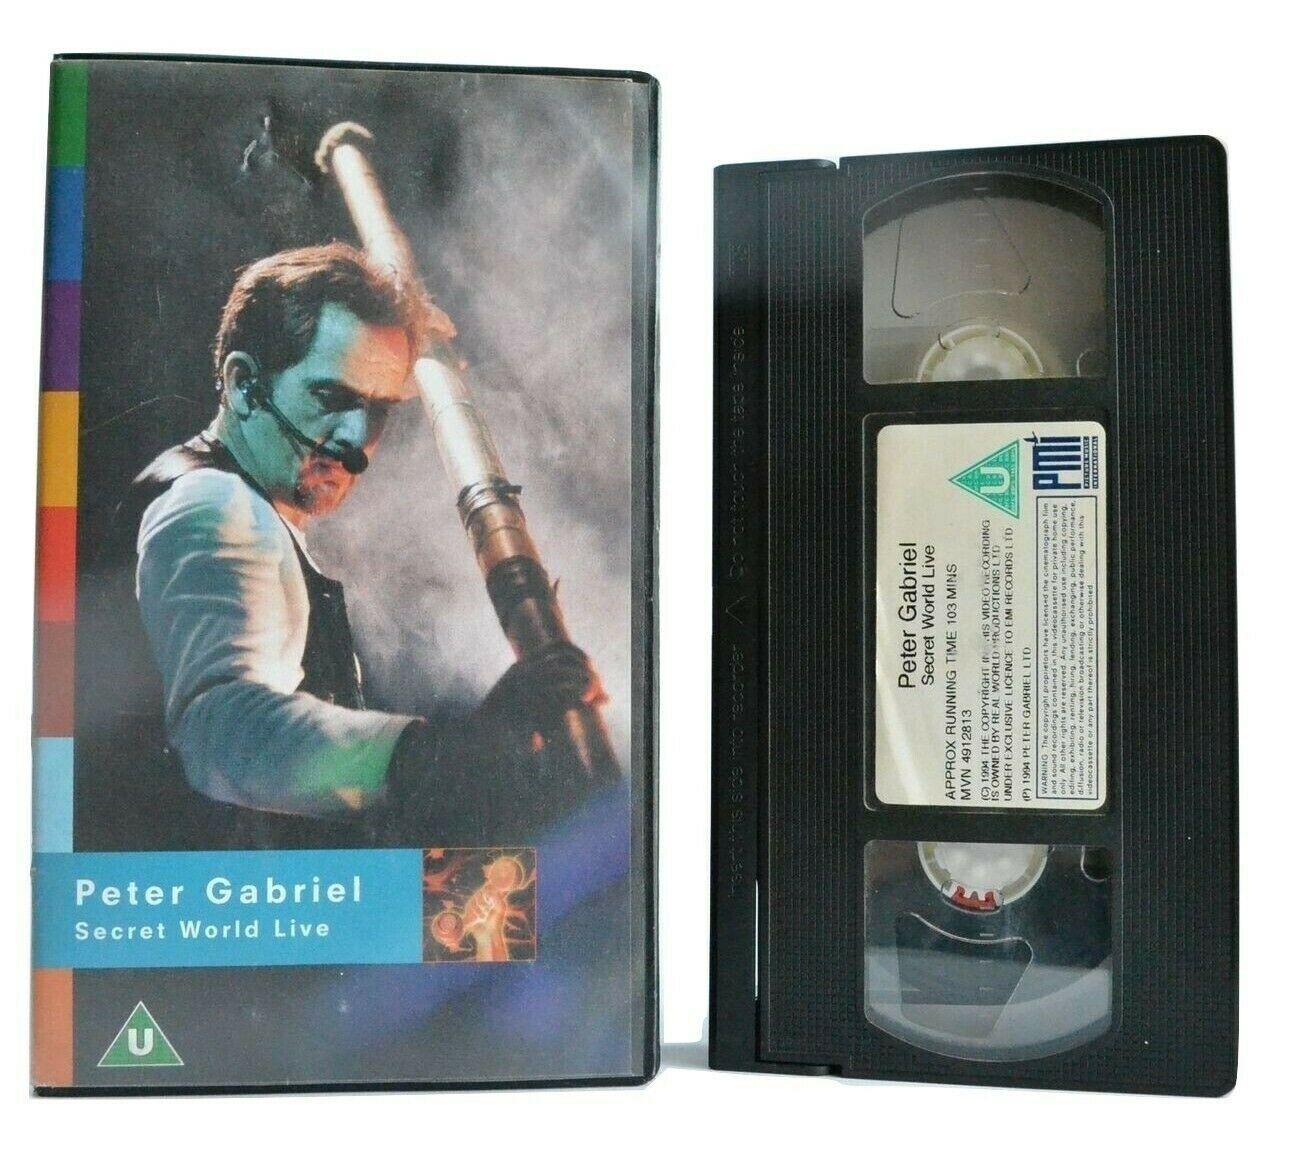 Peter Gabriel: Secret World Live - Concert - Performance - Rock Music - Pal VHS-